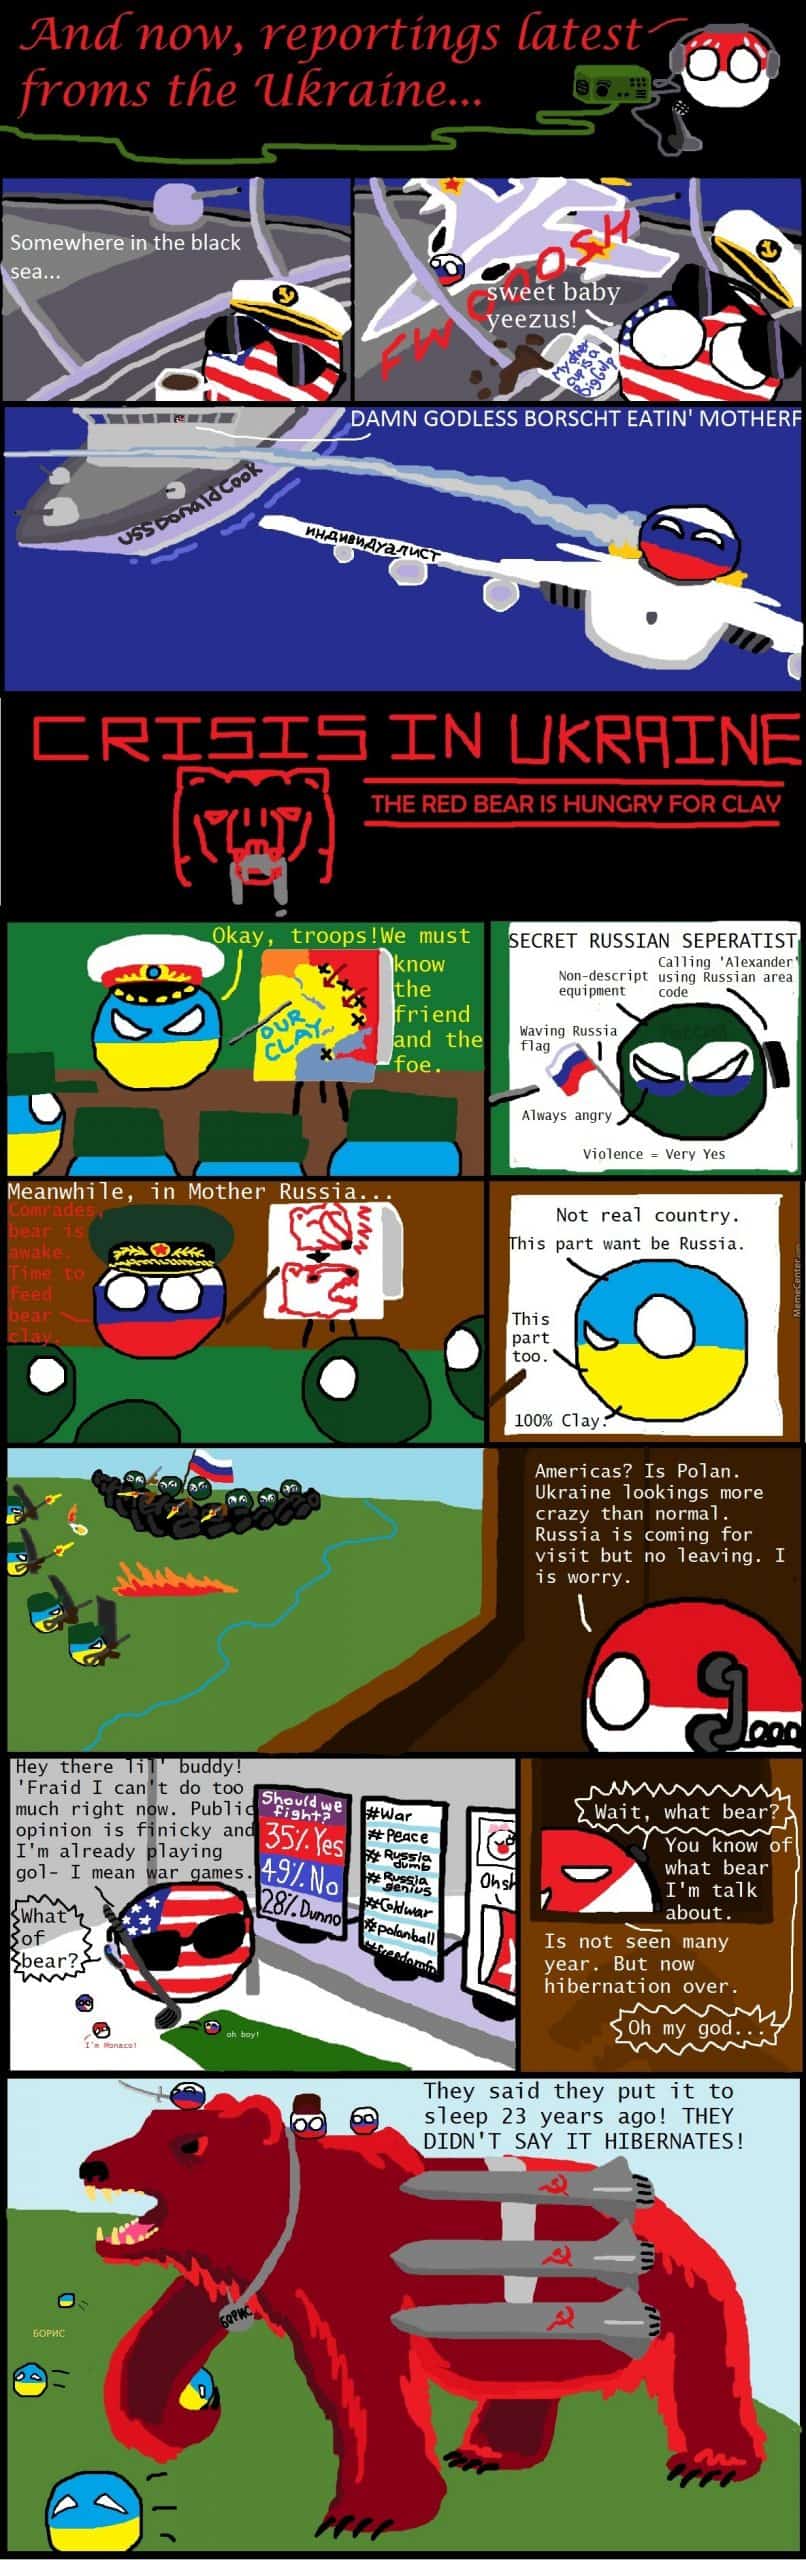 ukraine war memes ukraine crisis polandball version o 3087295